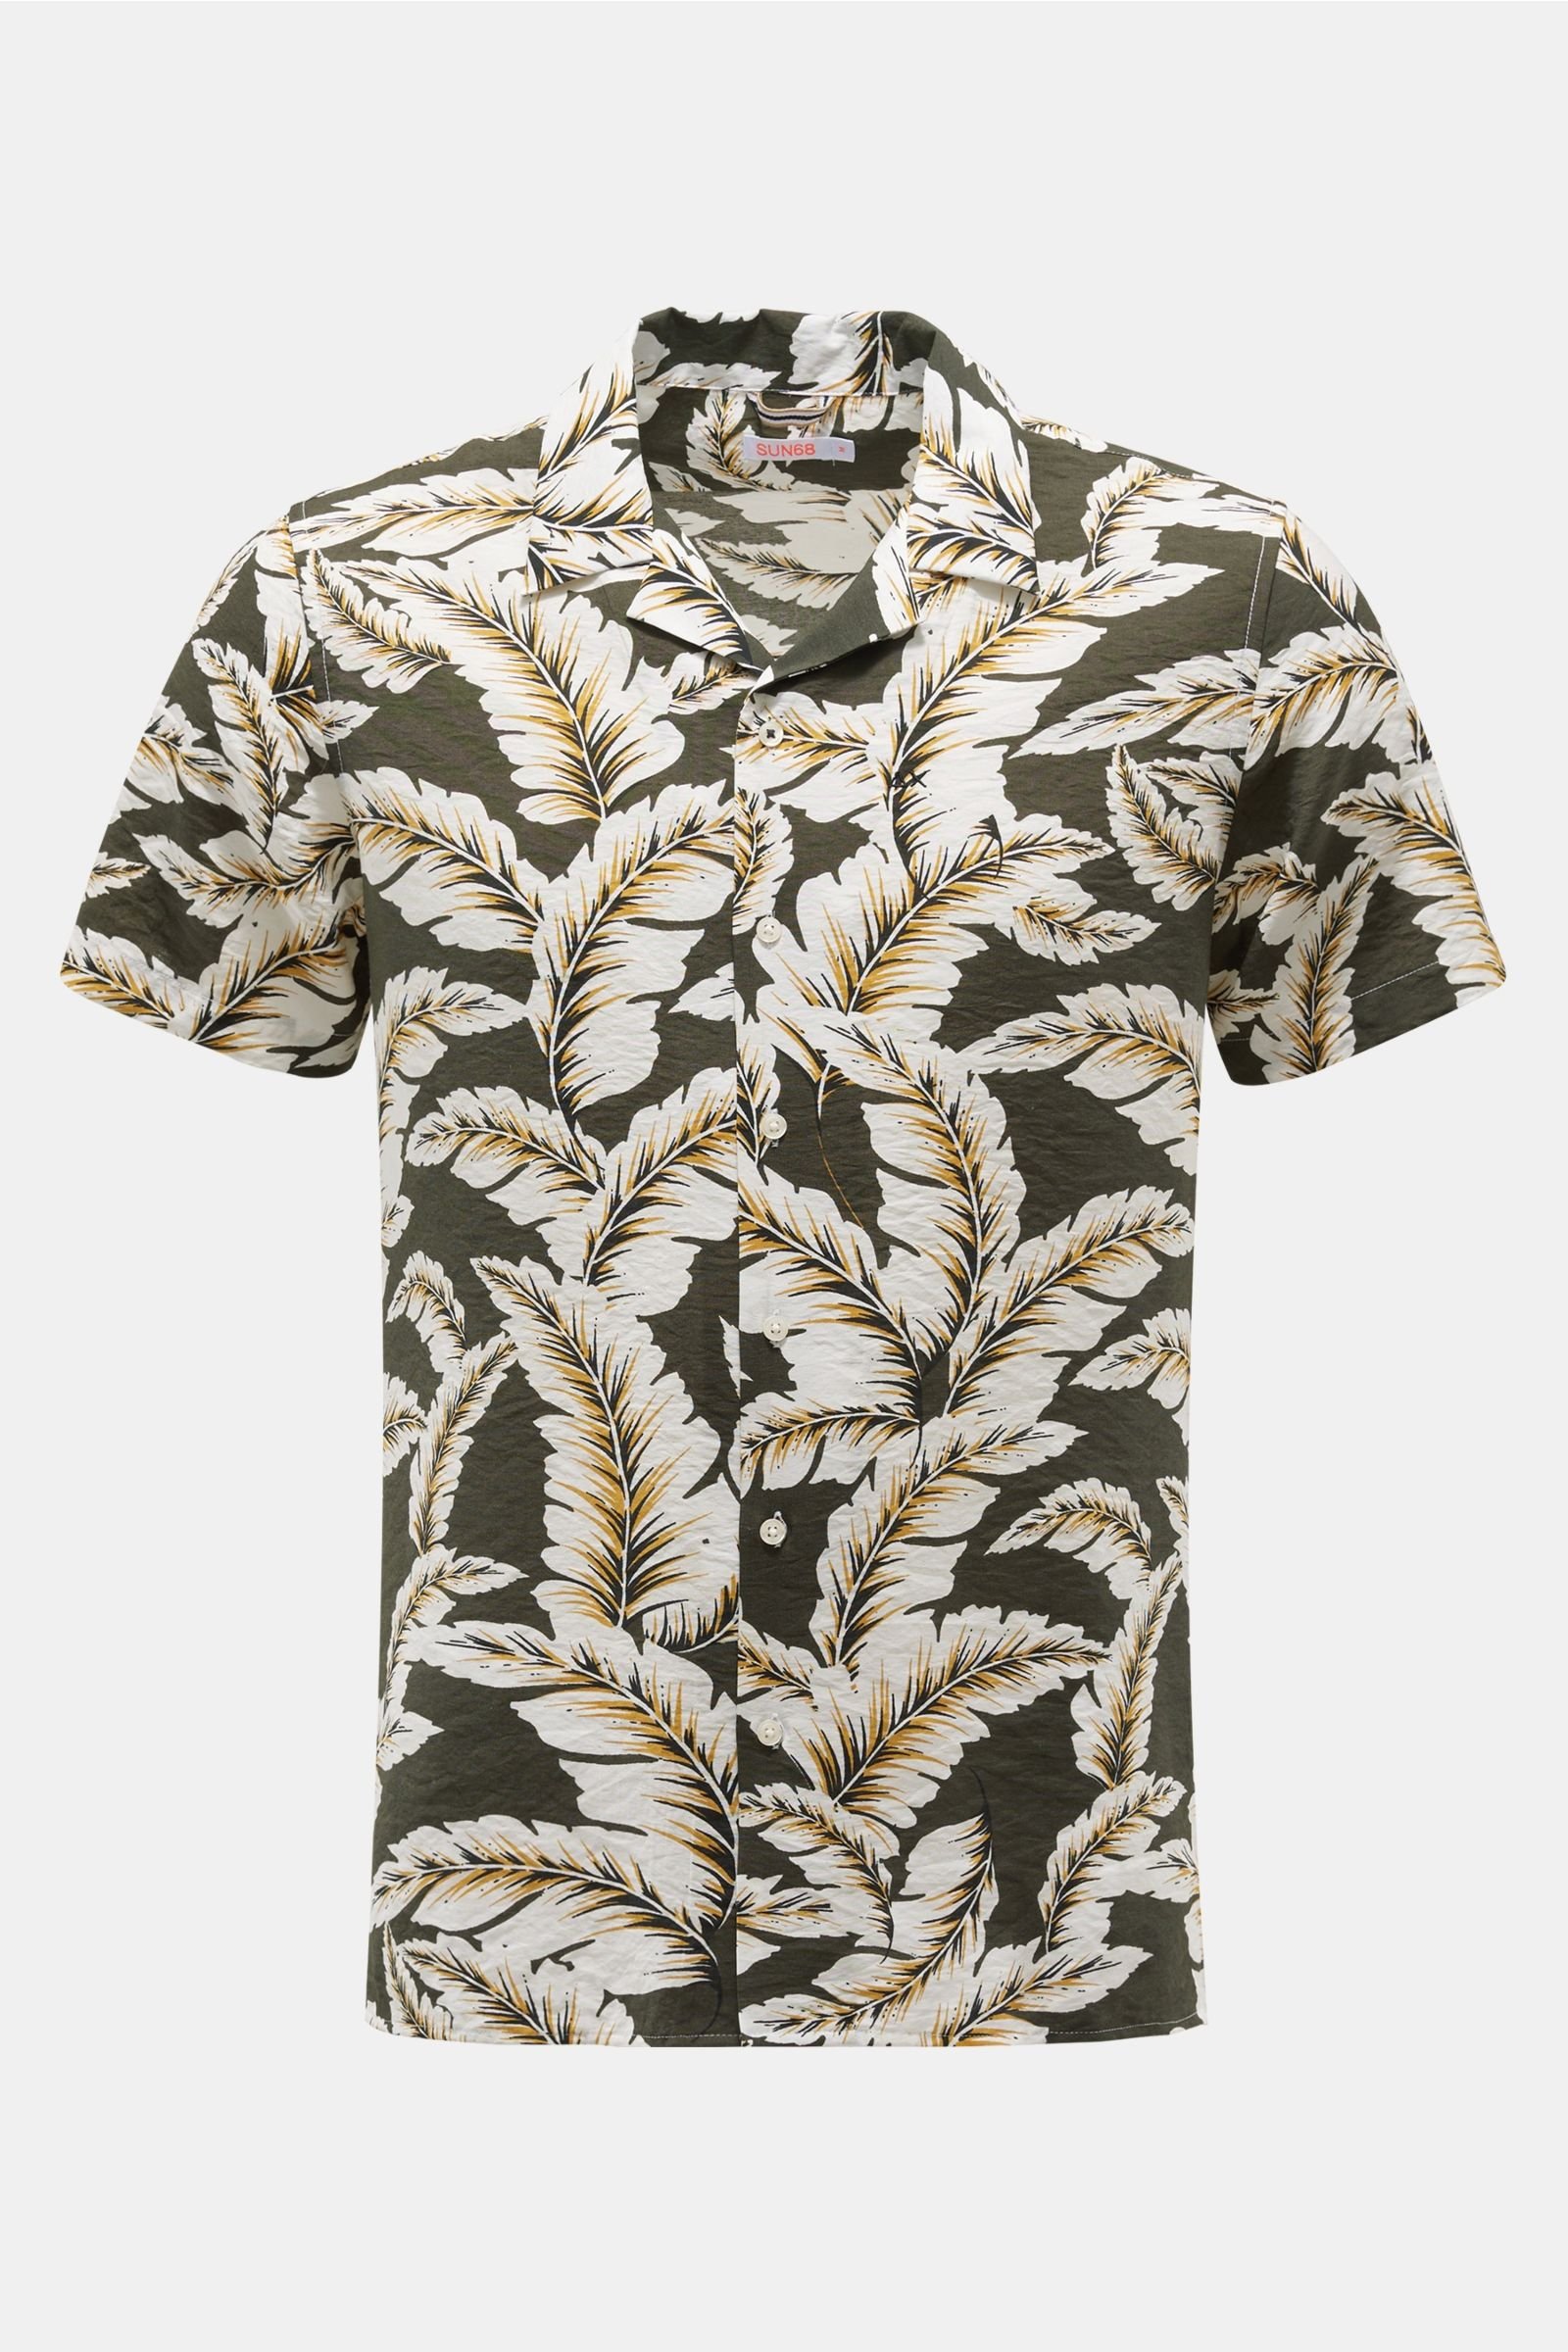 Short sleeve shirt Cuban collar olive/white patterned